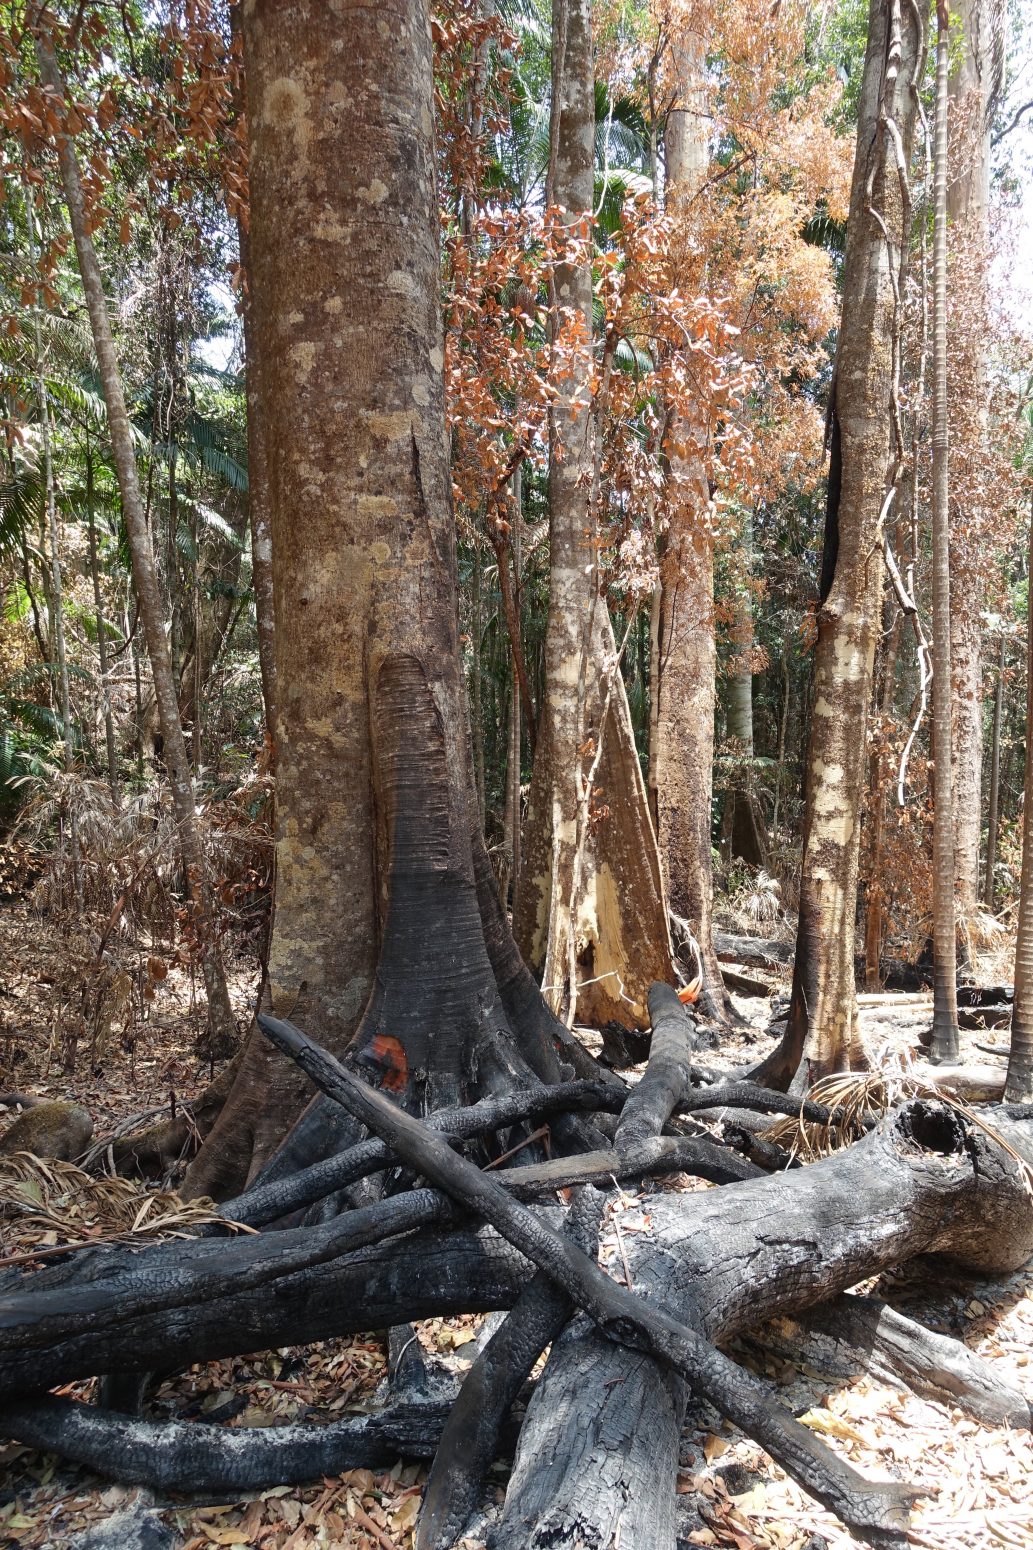 Rainforests & fire. Rob Kooyman Feb 2020